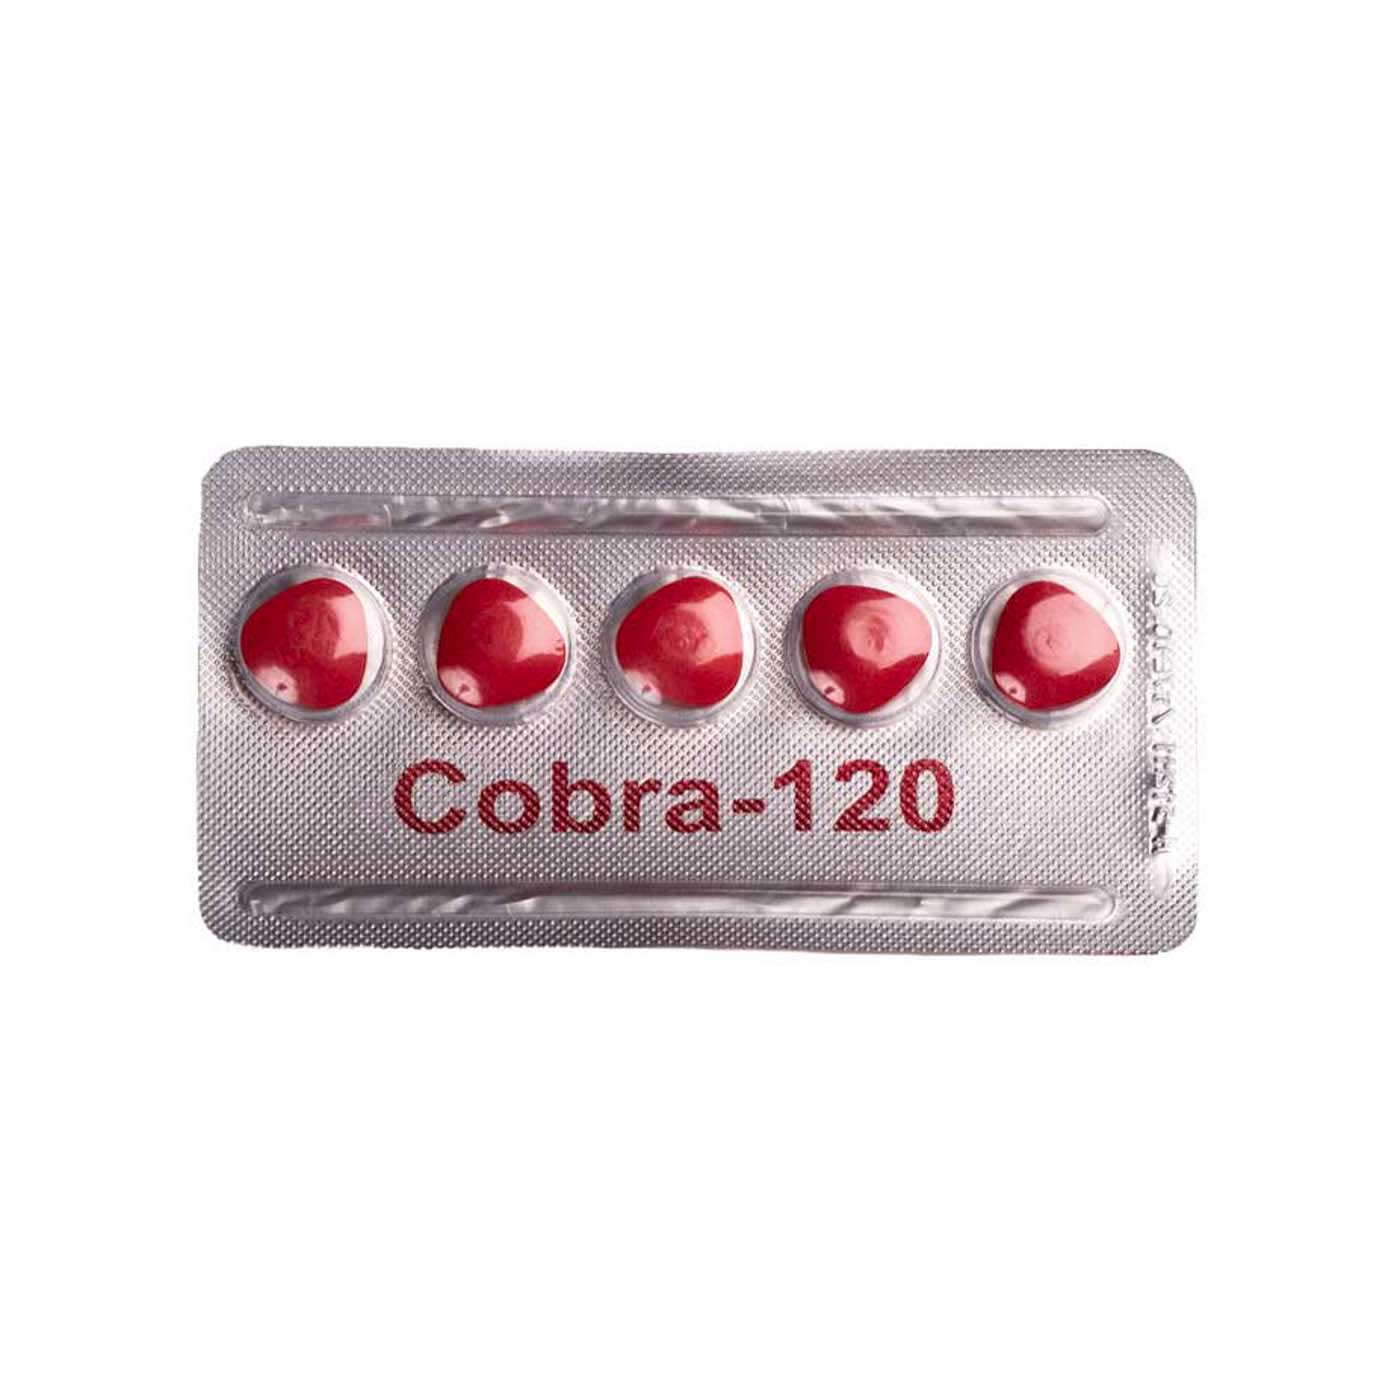 Cobra 120 - Sildenafil, Generic Viagra